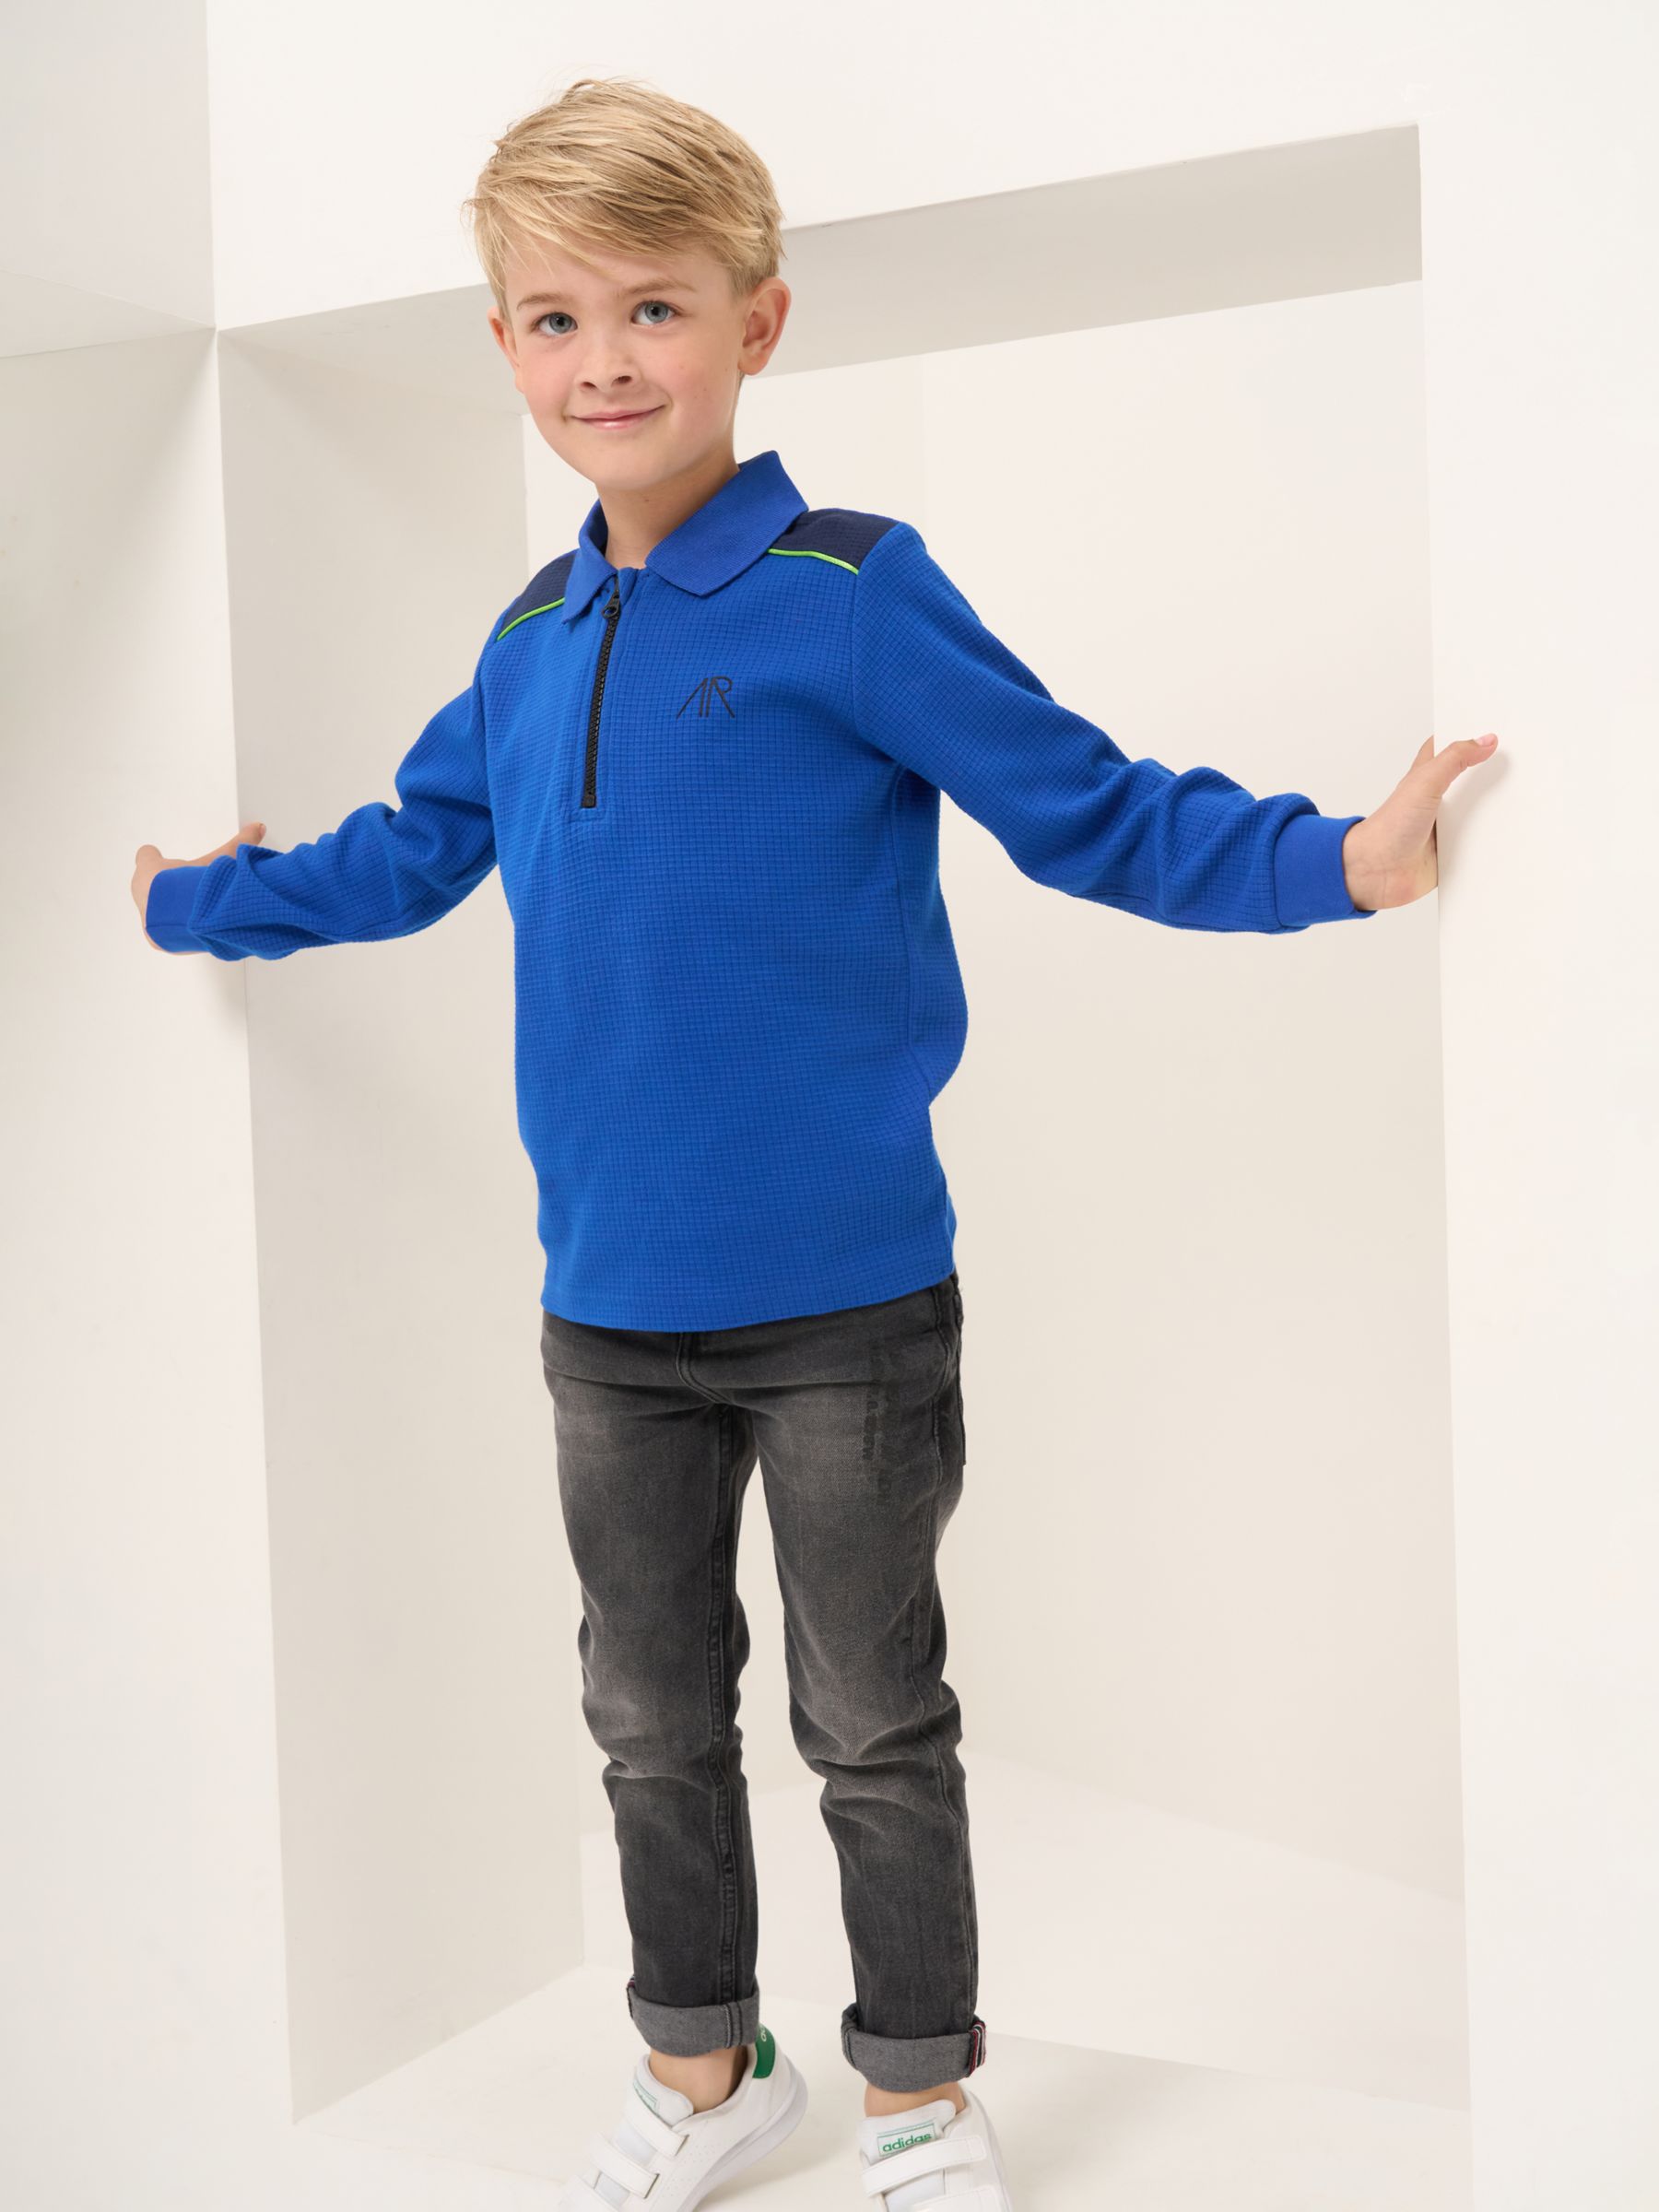 Angel & Rocket Kids' Long Sleeve Polo Shirt, Blue, 3 years